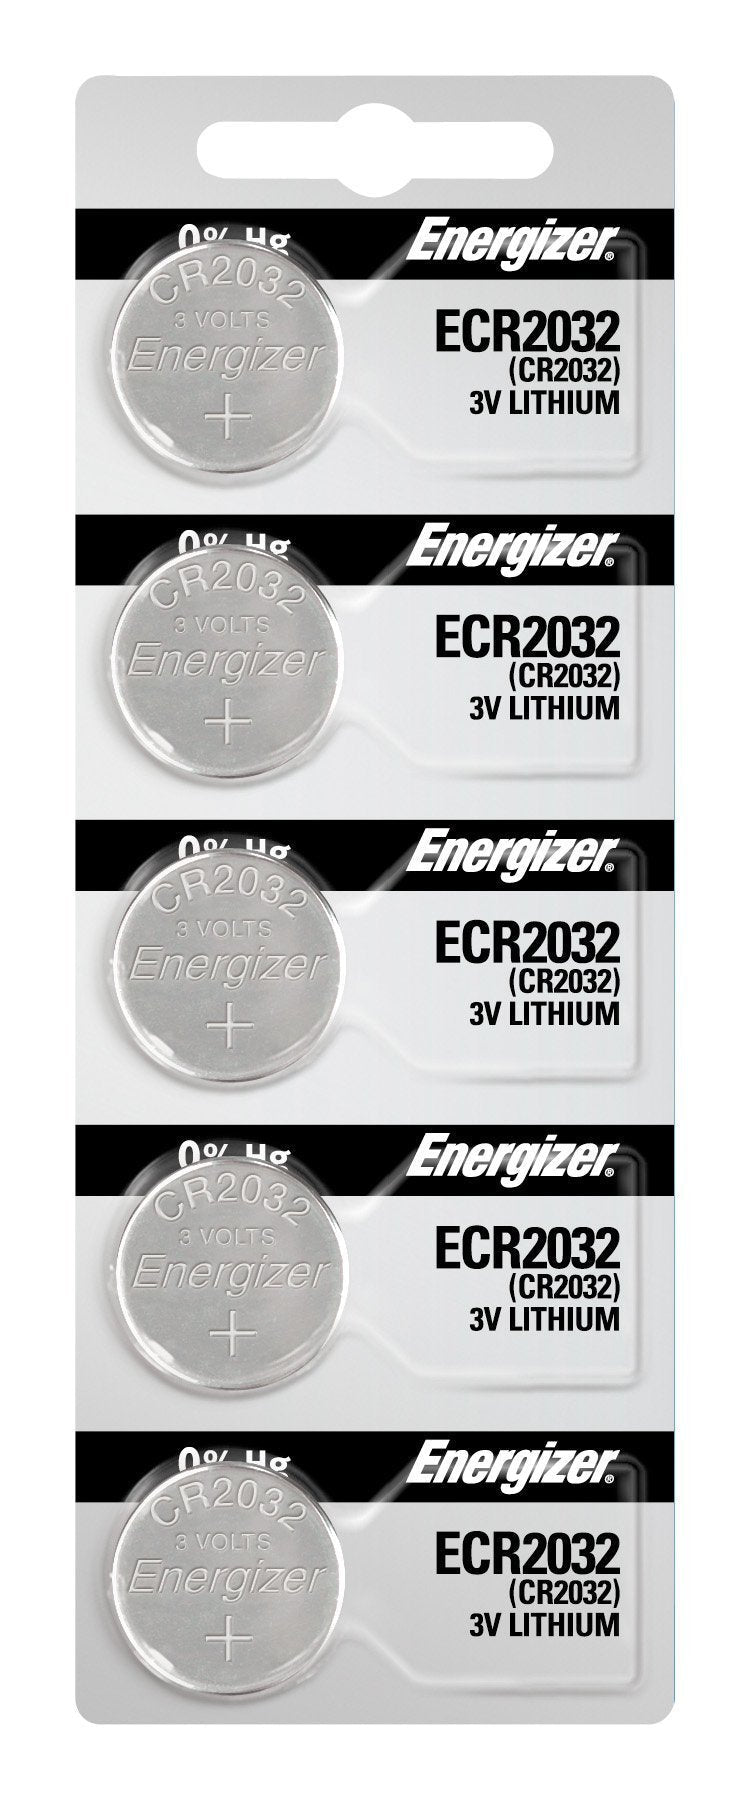 [Australia] - Energizer 2032 Battery CR2032 Lithium 3v, 5 Count (Pack of 1) 